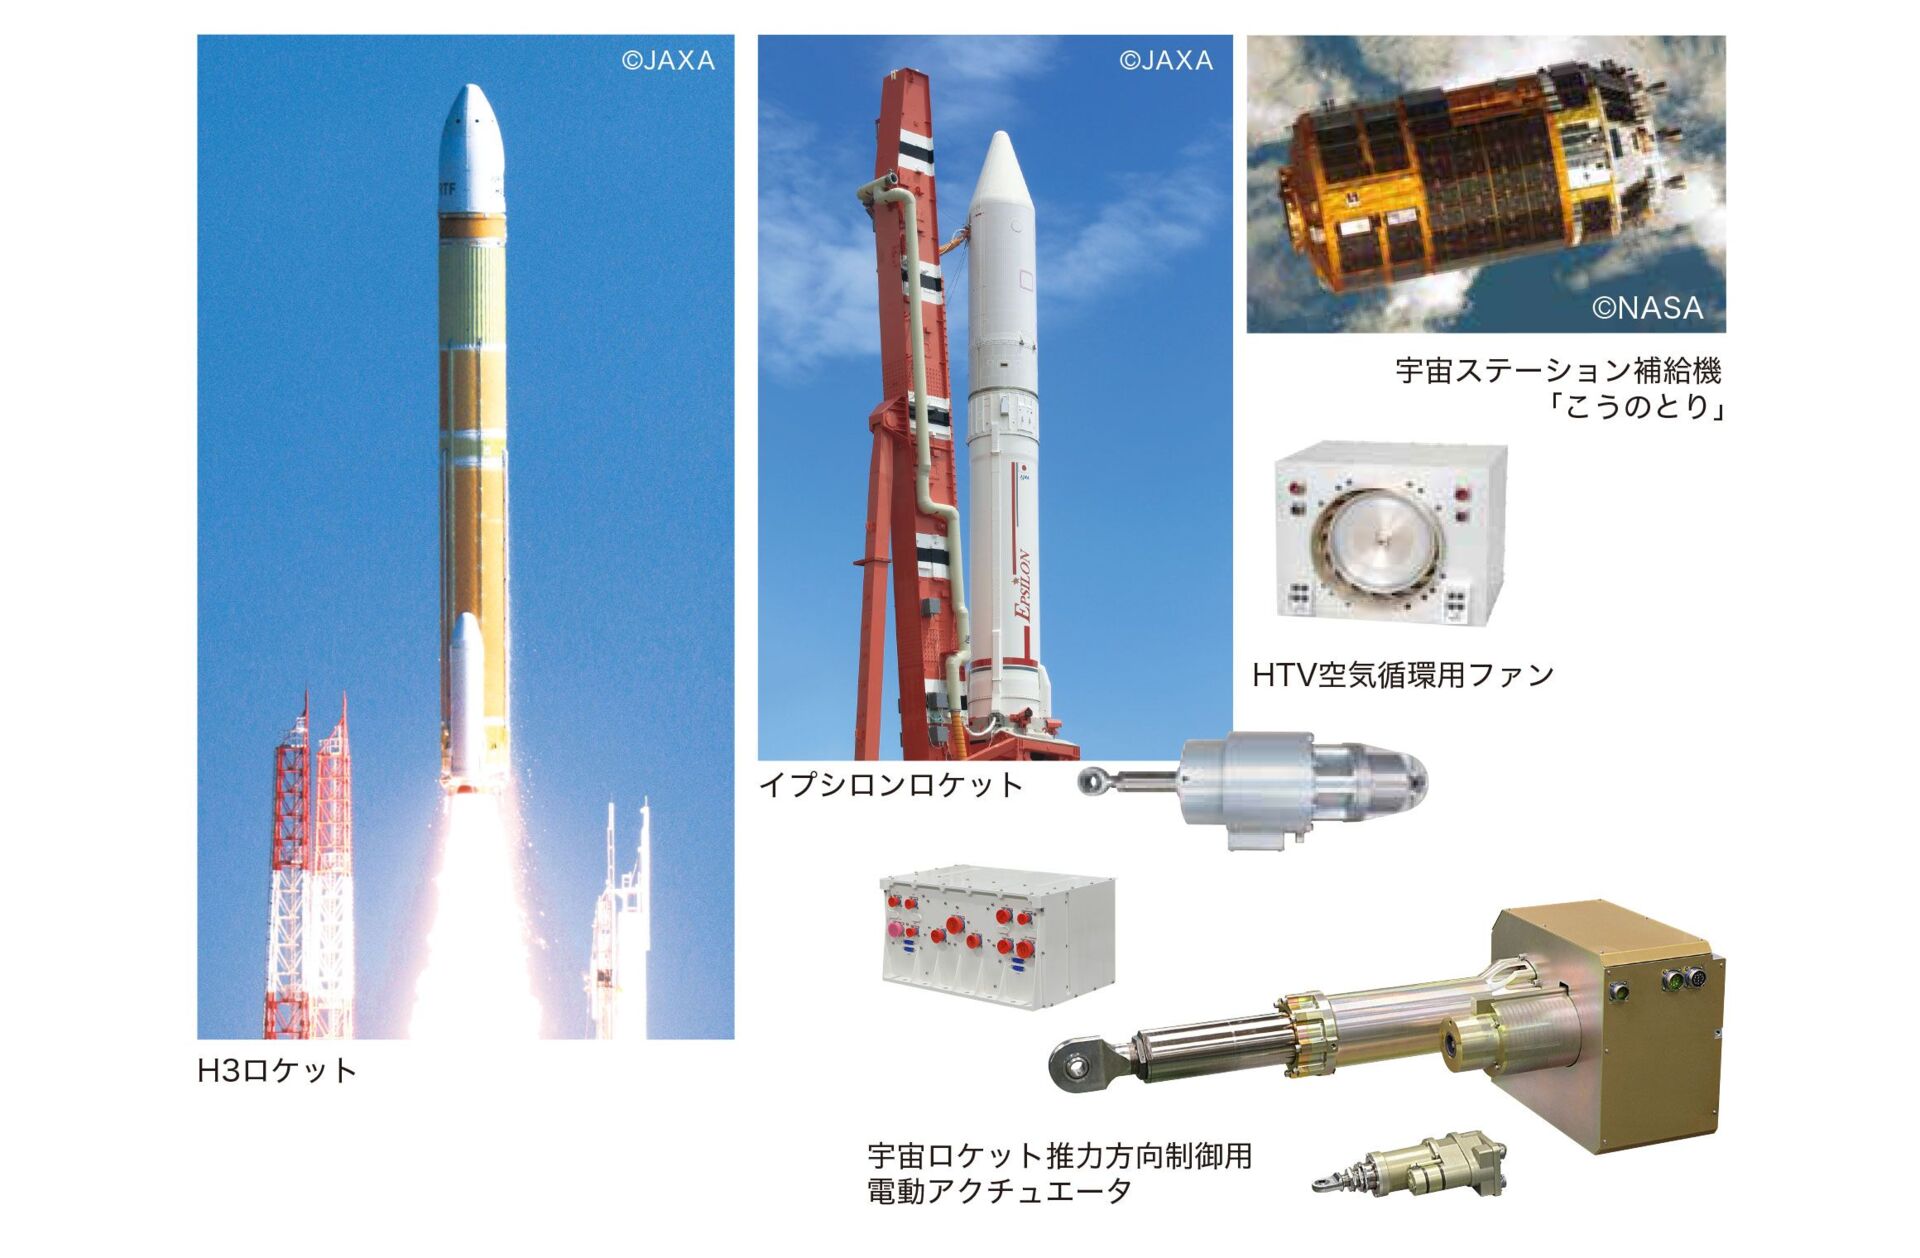 H-IIBロケット、イプシロンロケット、宇宙ステーション補給機「こうのとり」、HTV空気循環用ファン、宇宙ロケット姿勢制御用サーボアクチュエータ